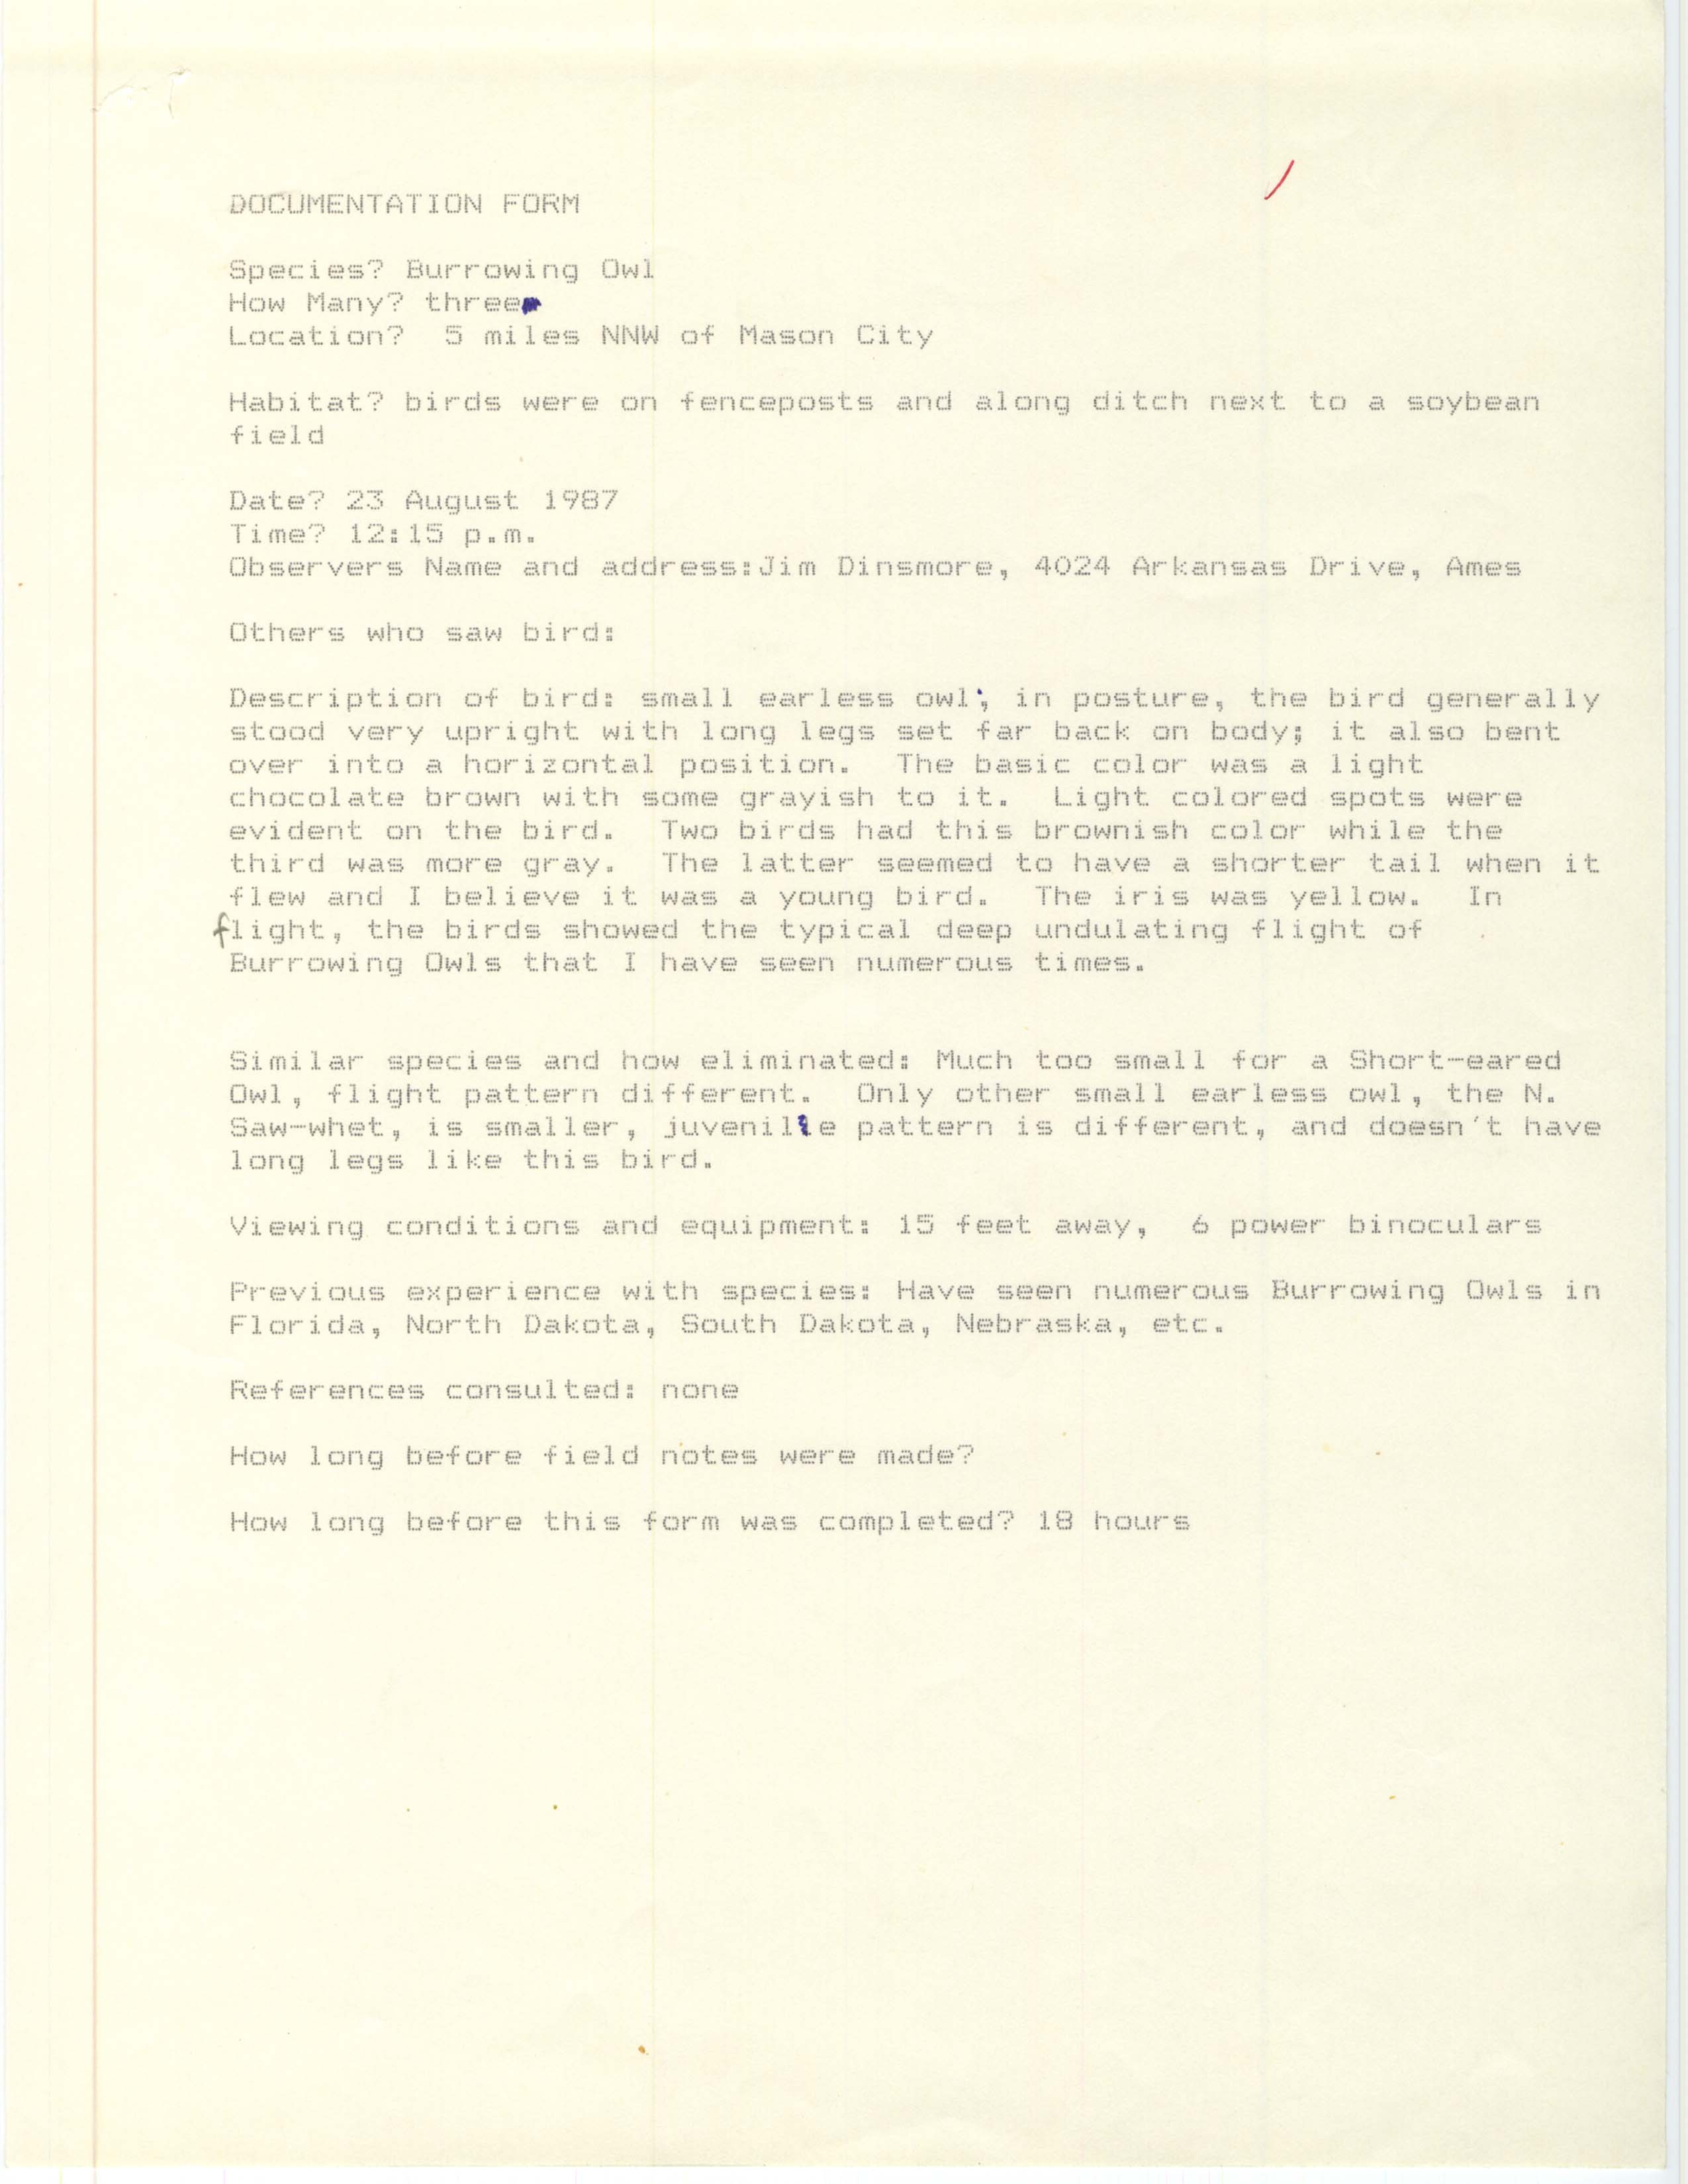 Rare bird documentation form for Burrowing Owl north-northwest of Mason City, 1987